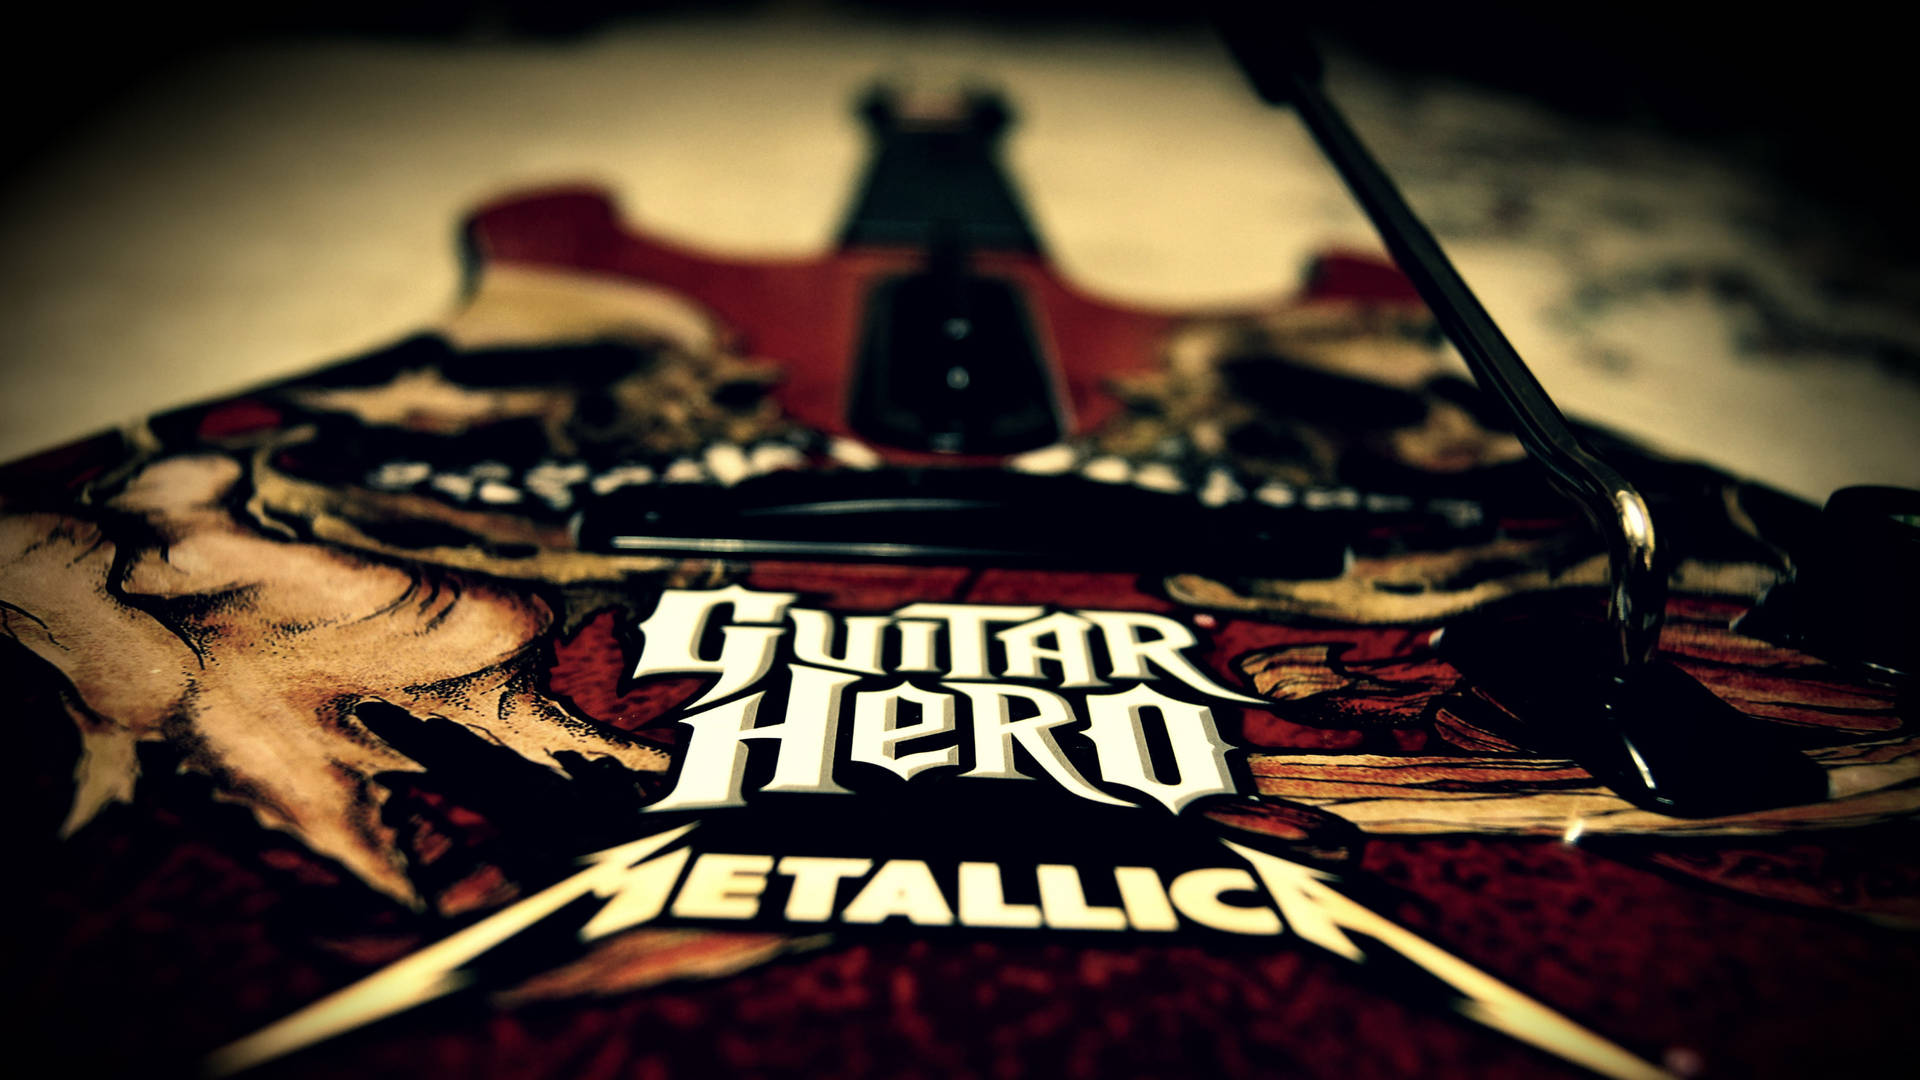 Guitar Hero Metallica On Guitar Background